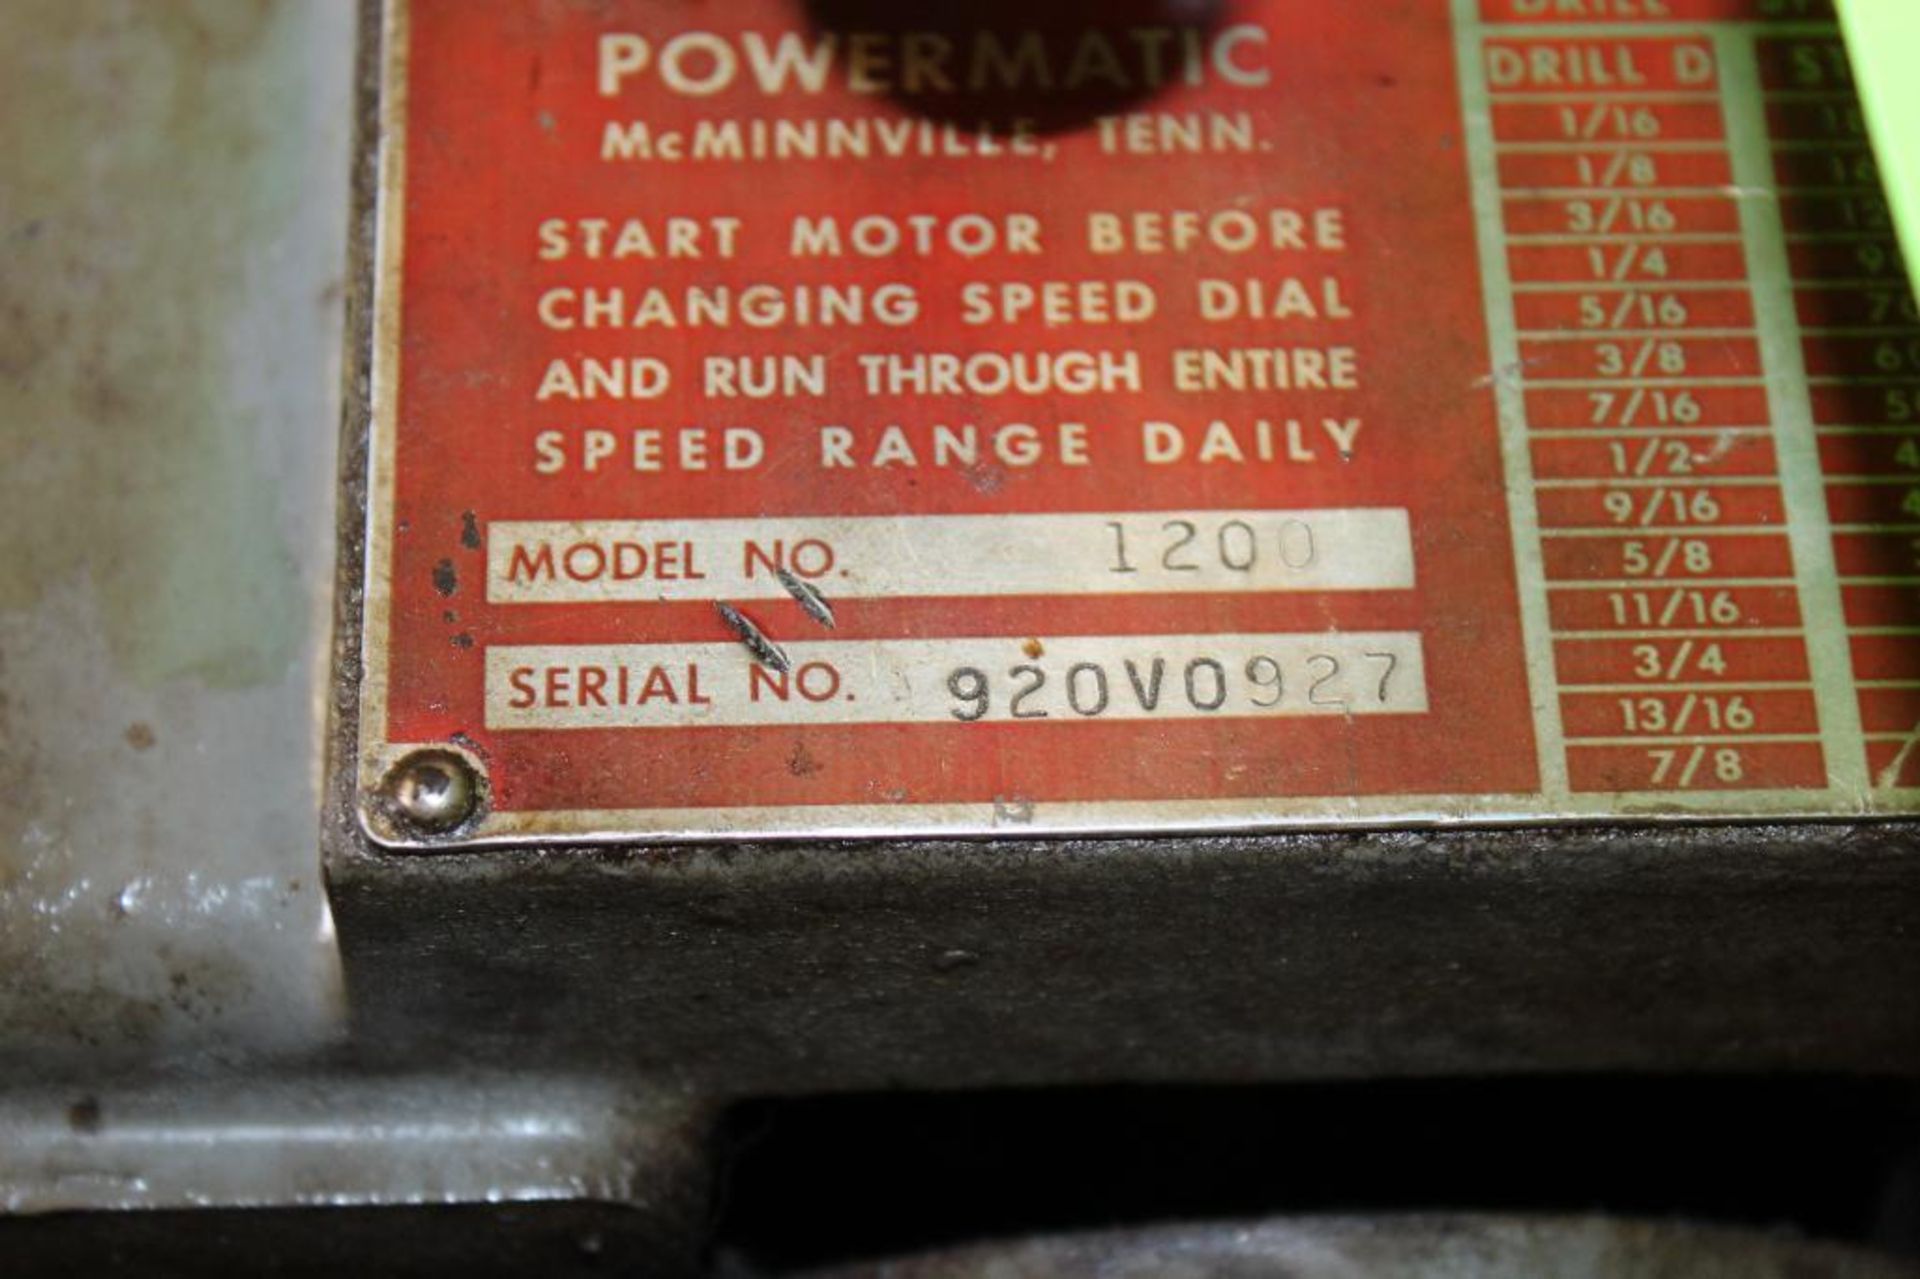 Power Model 1200 Drill Press - Image 3 of 5